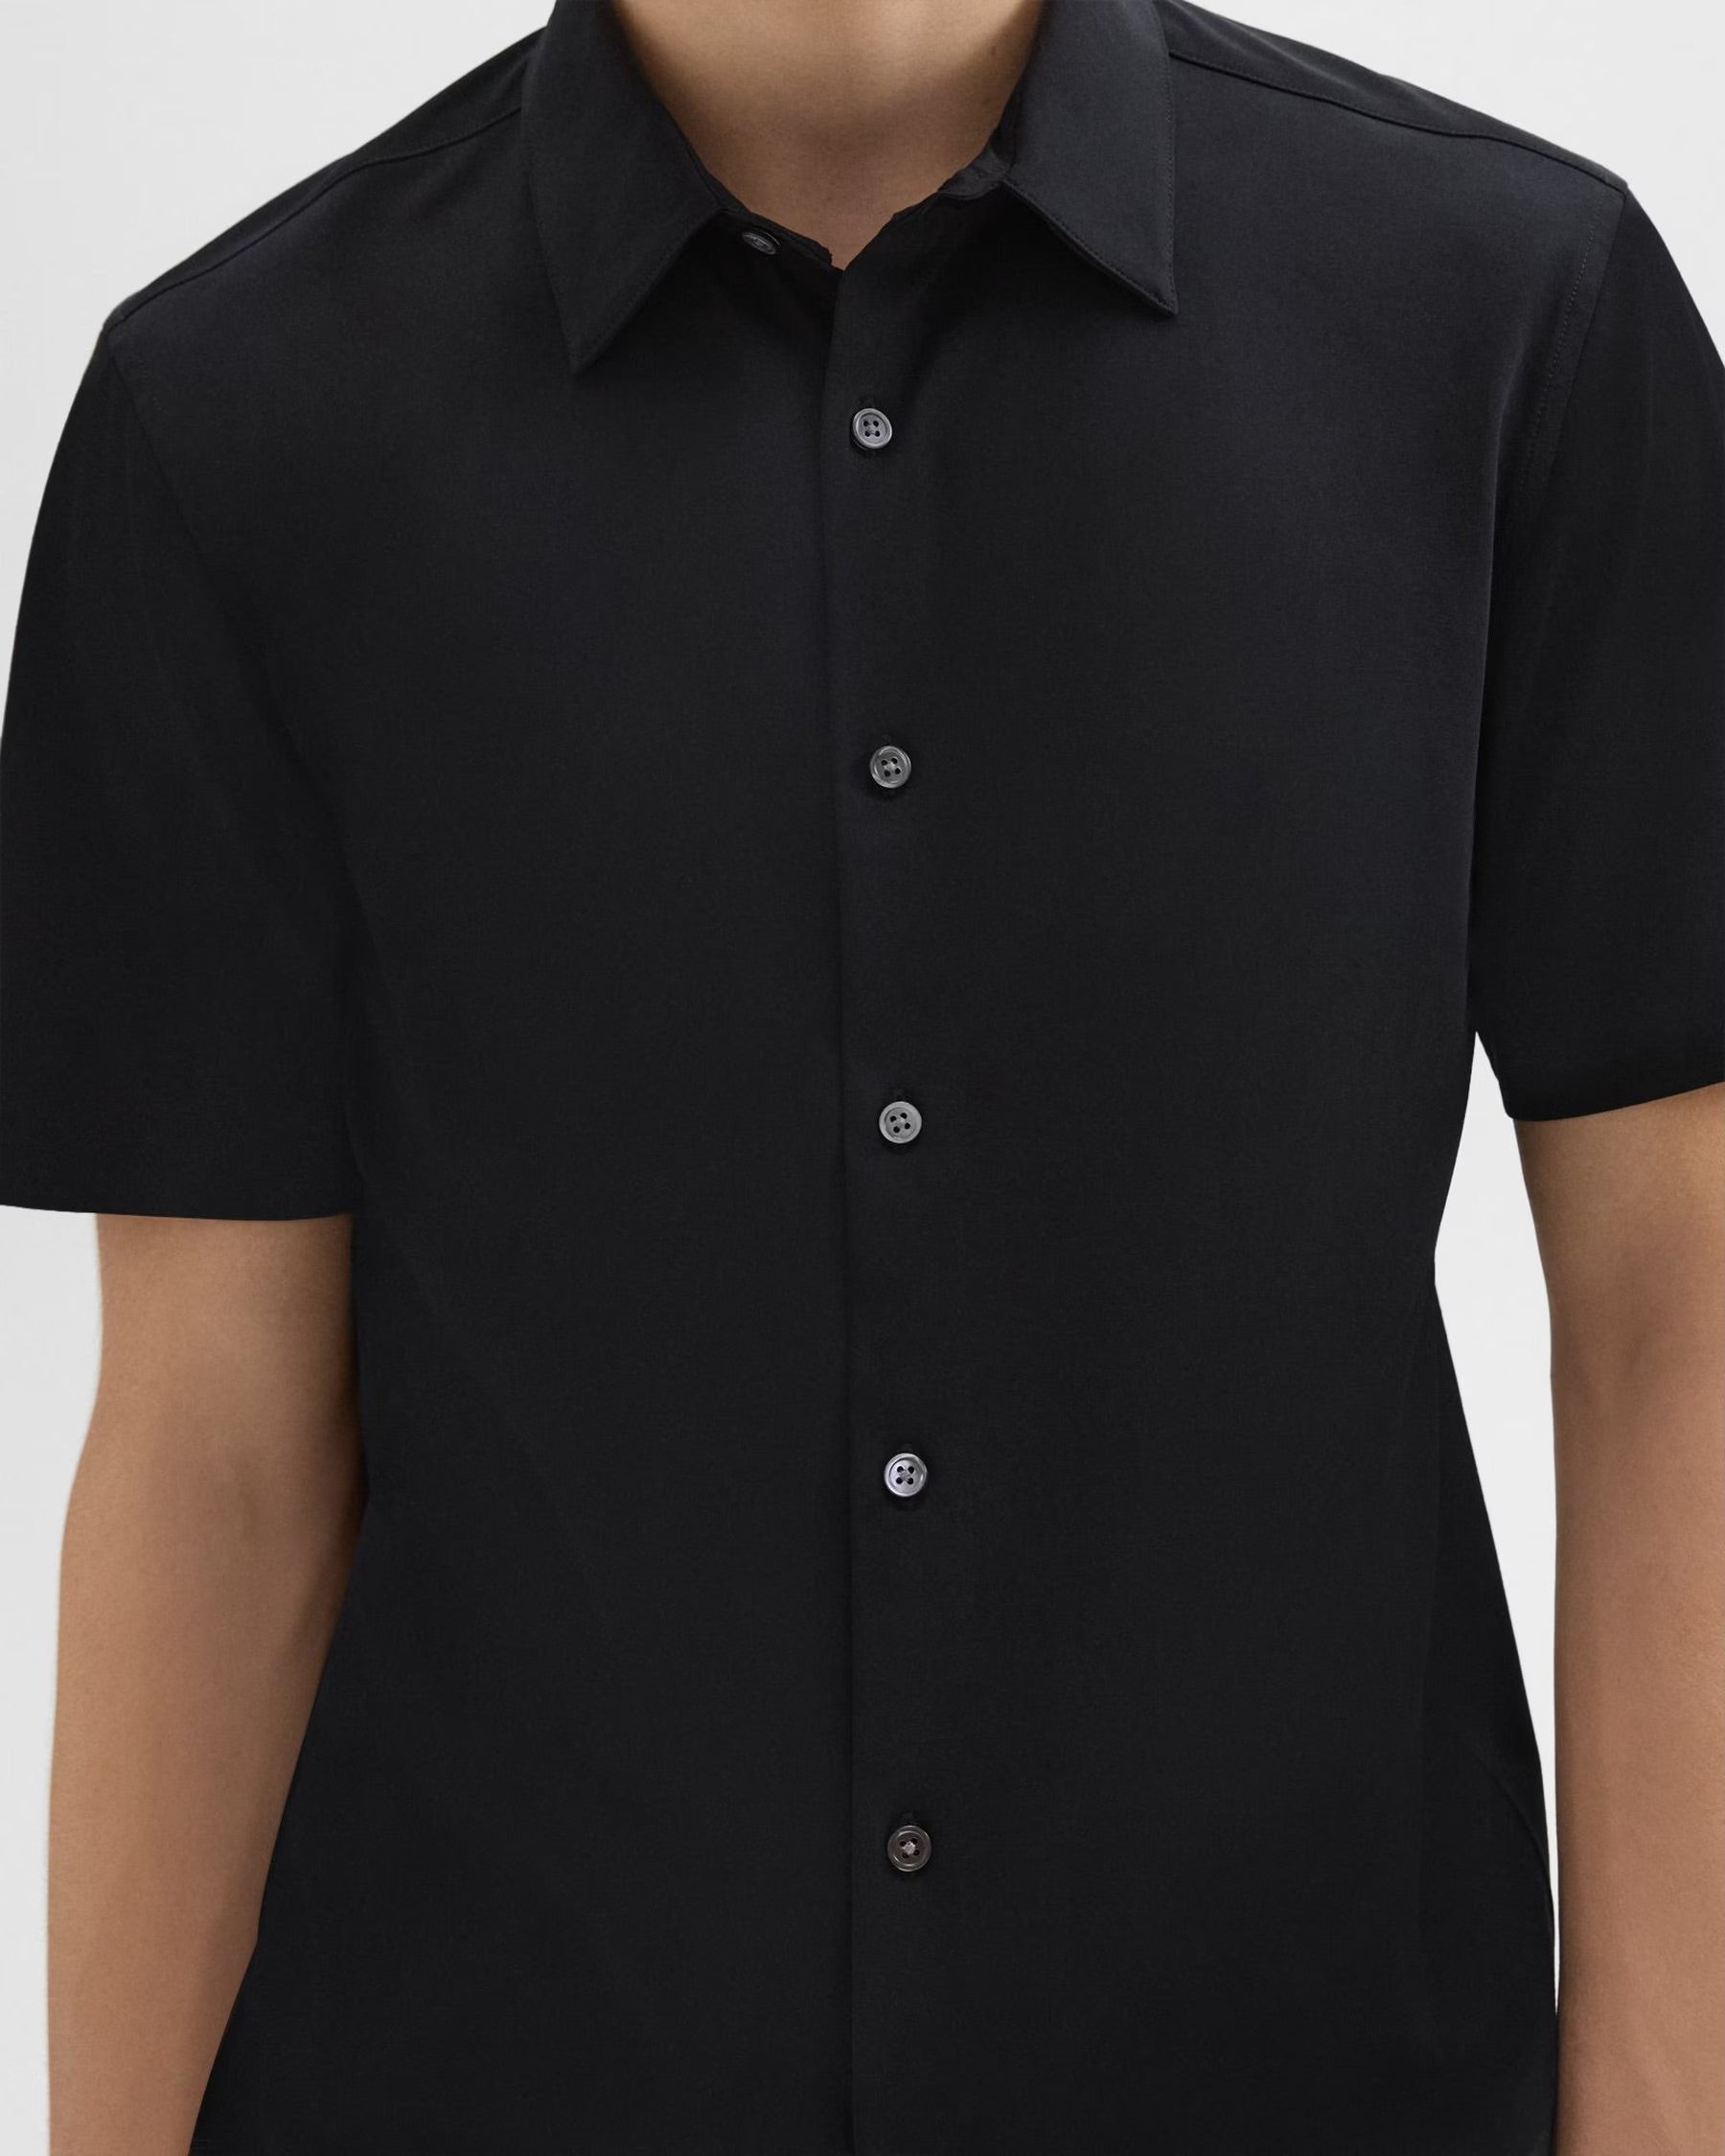 Irving Sylvain Structure Short Sleeve Shirt Black